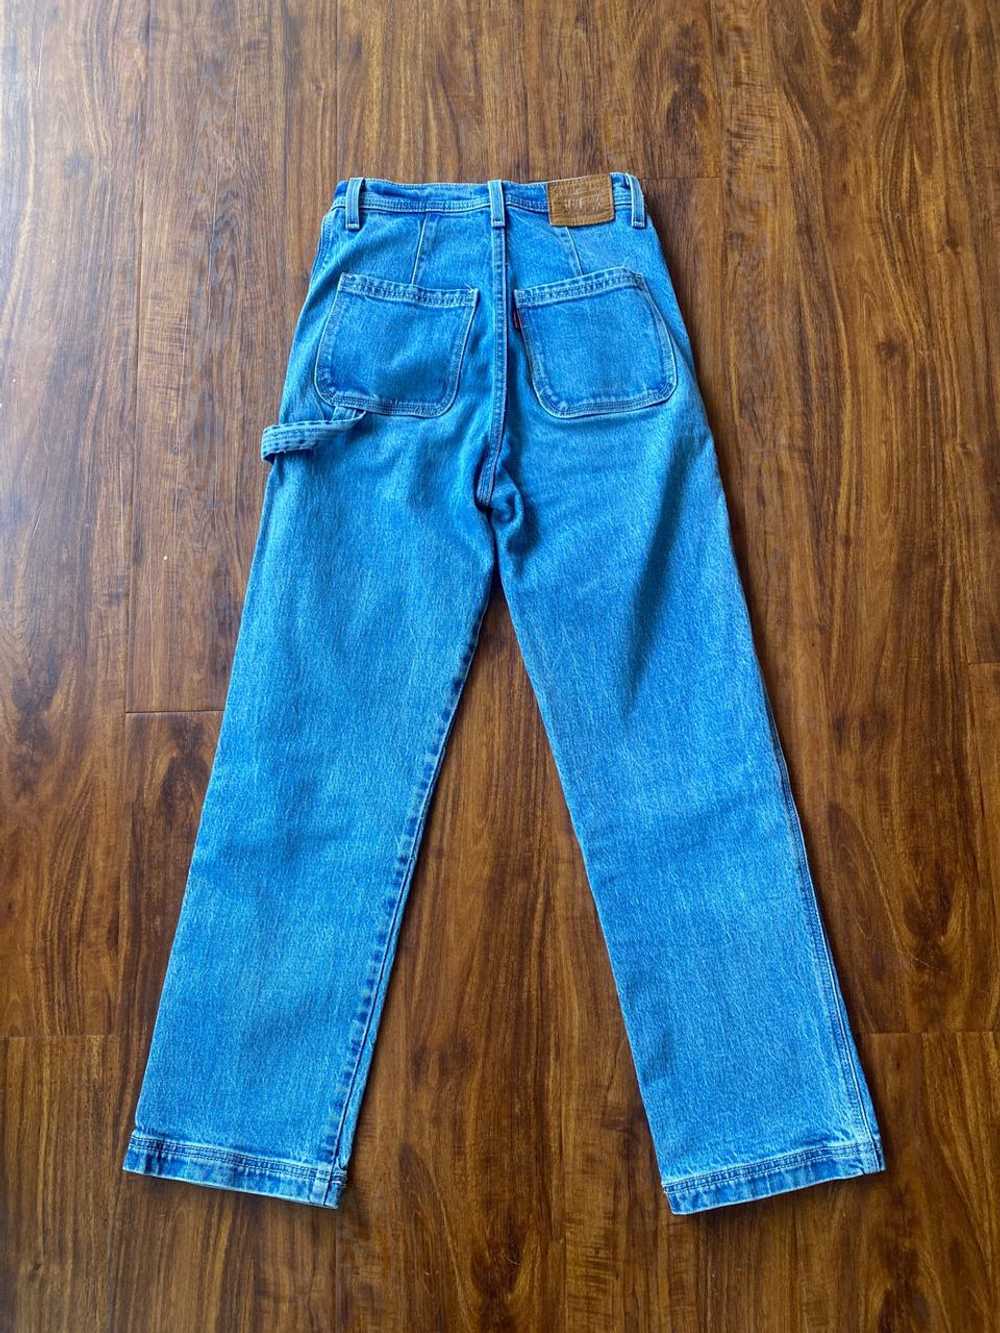 LEVI'S Ribcage straight carpenter jeans (24") |… - image 4